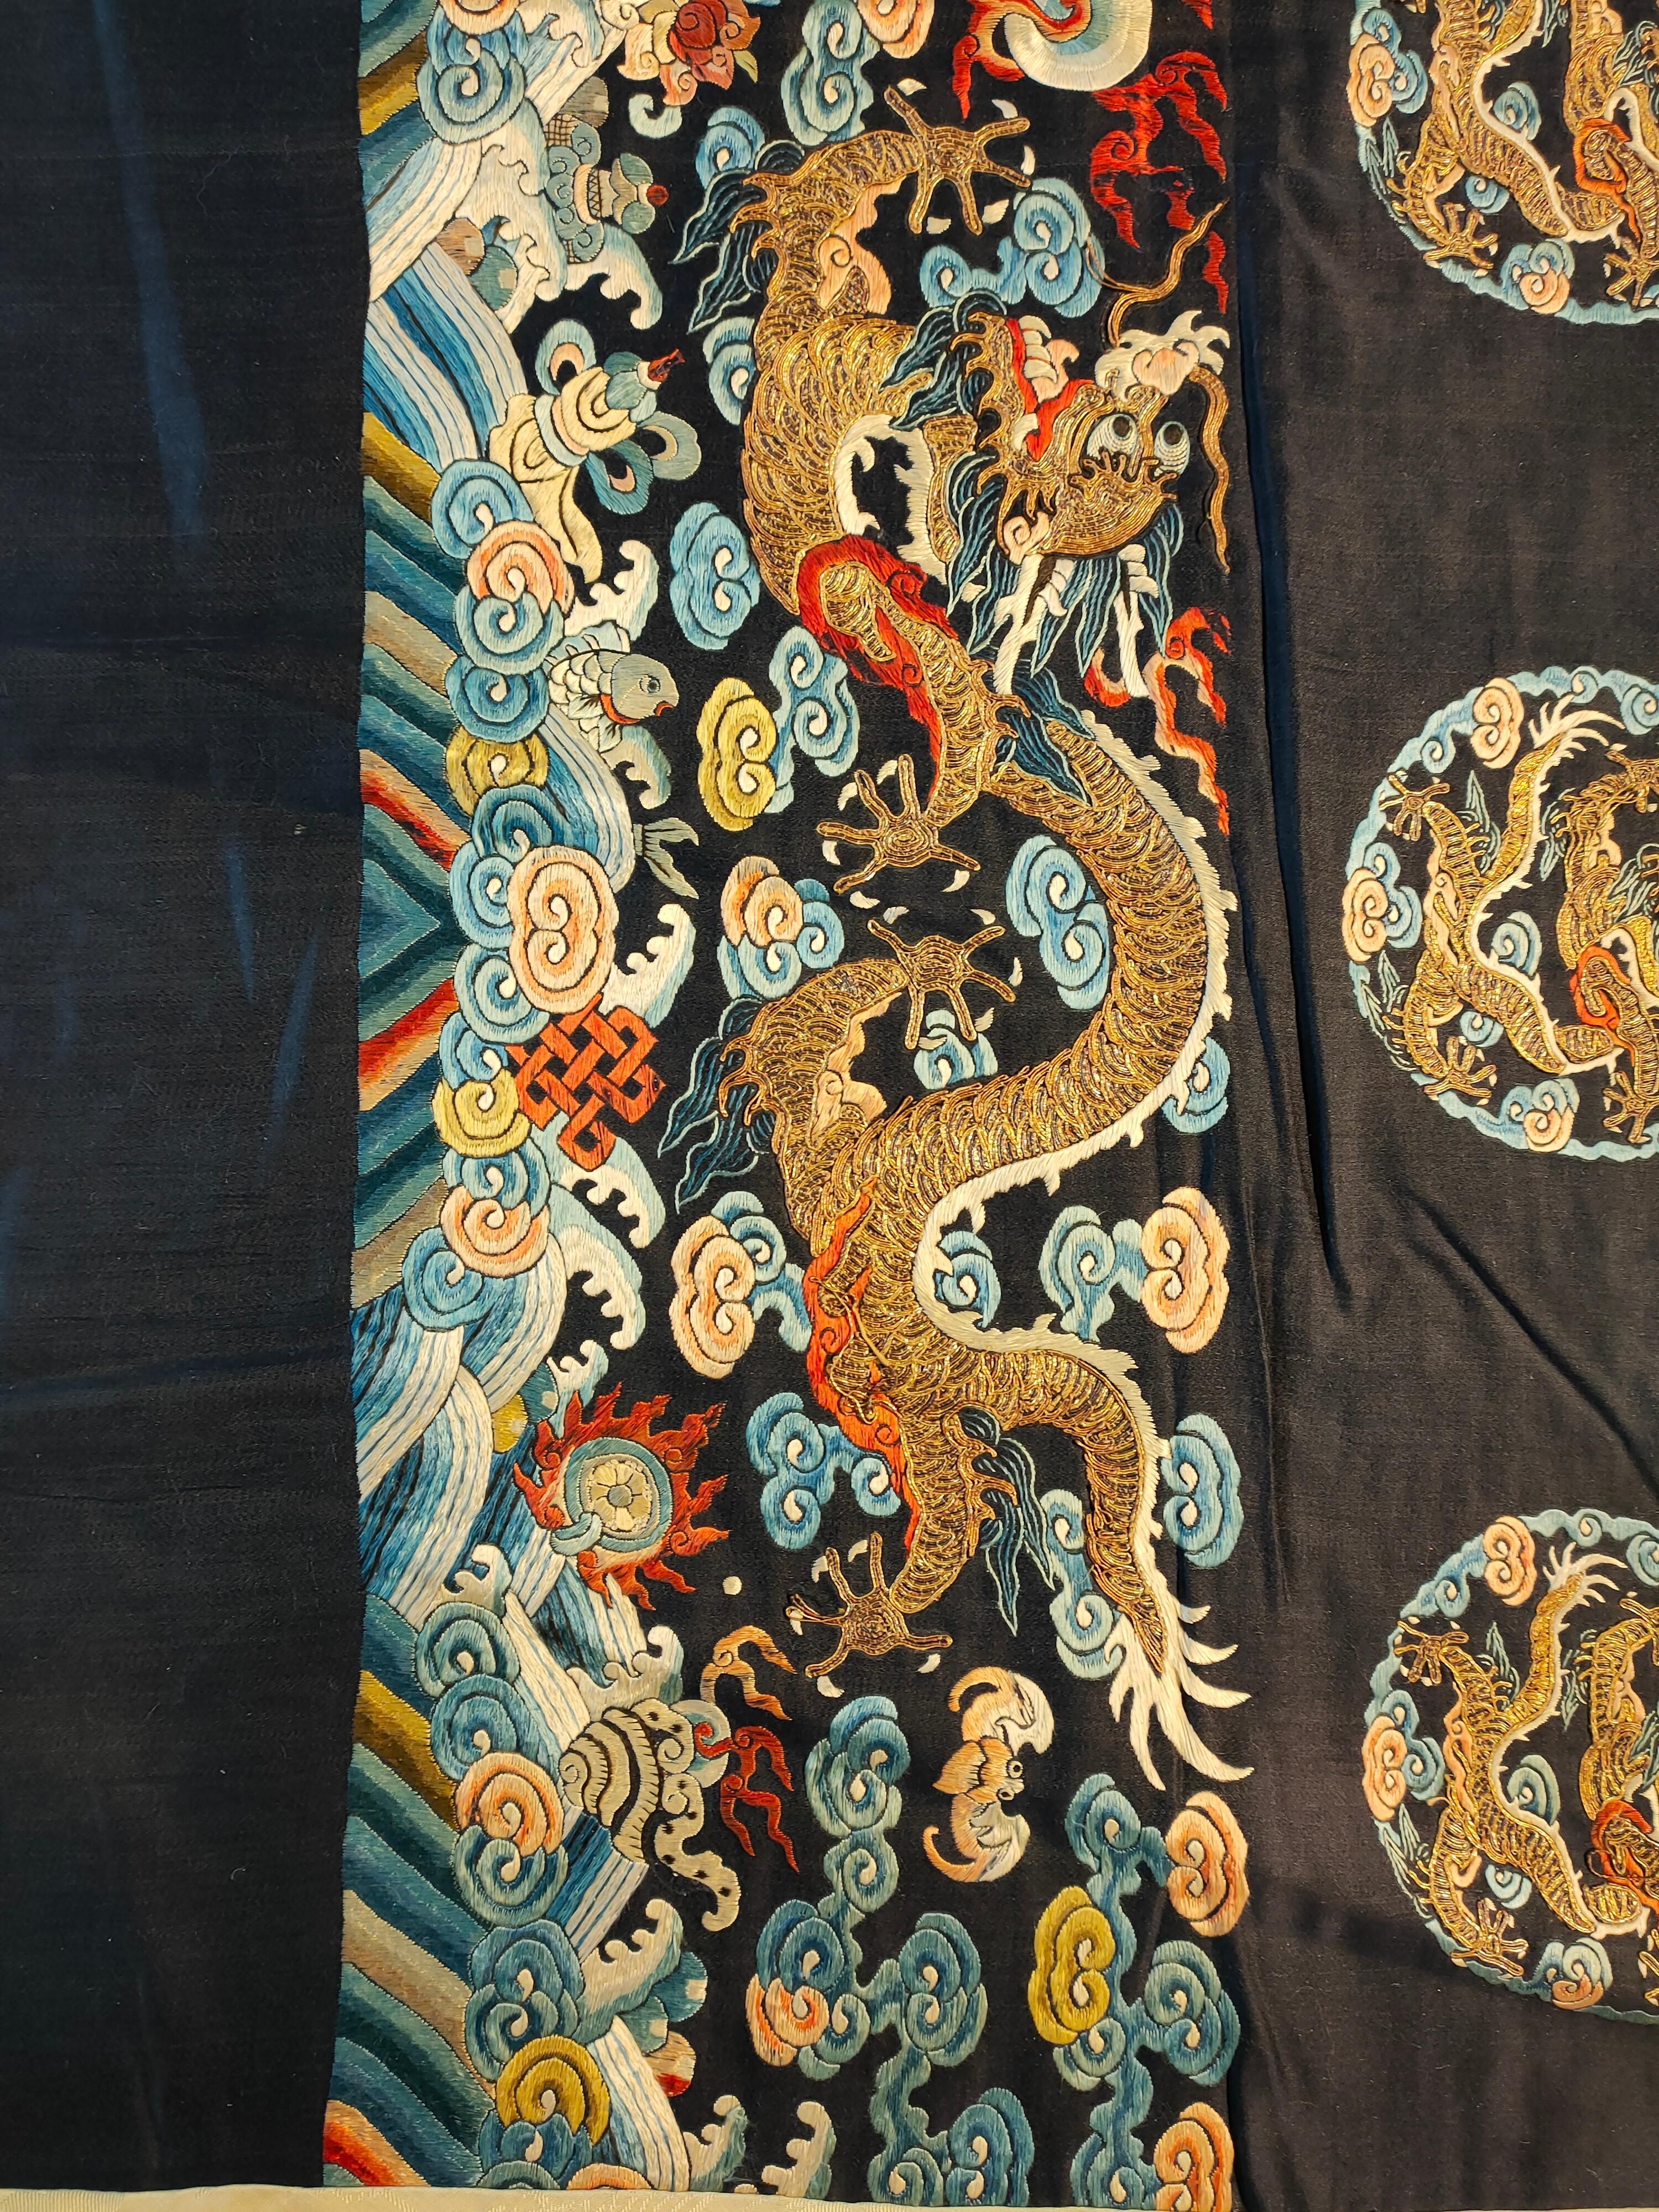 19th Century Chinese Silk & Metallic Thread Dragon Embroidery 
2'6